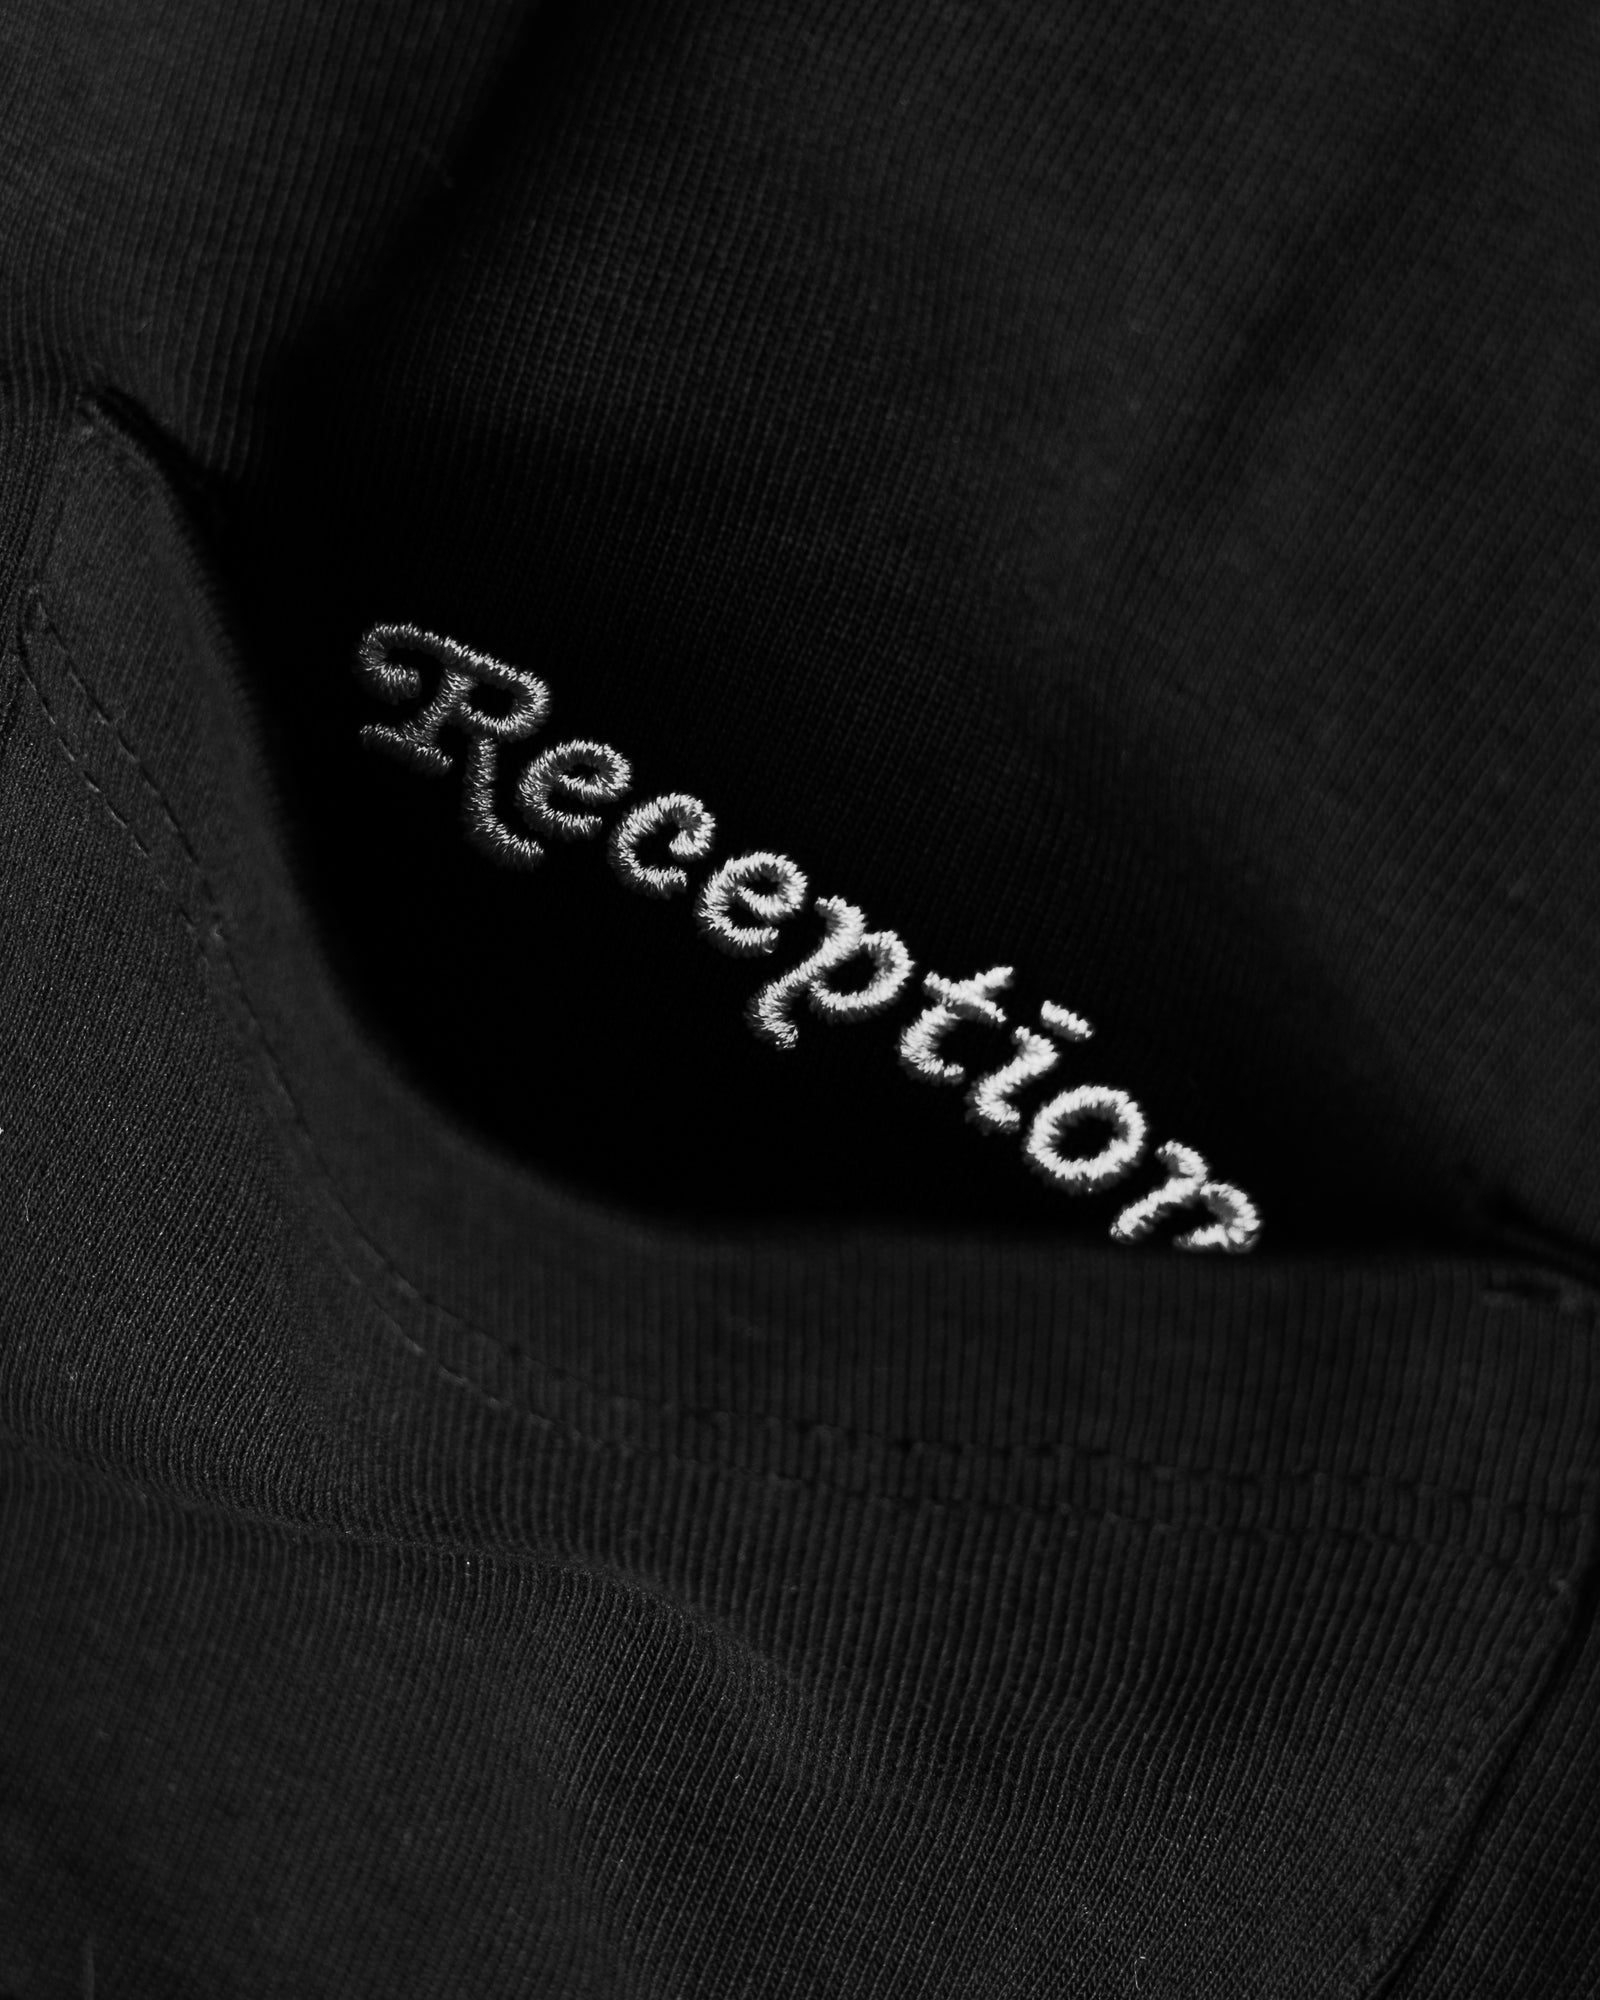 Reception - Tee - LS Pocket - Rugby Tee - Black